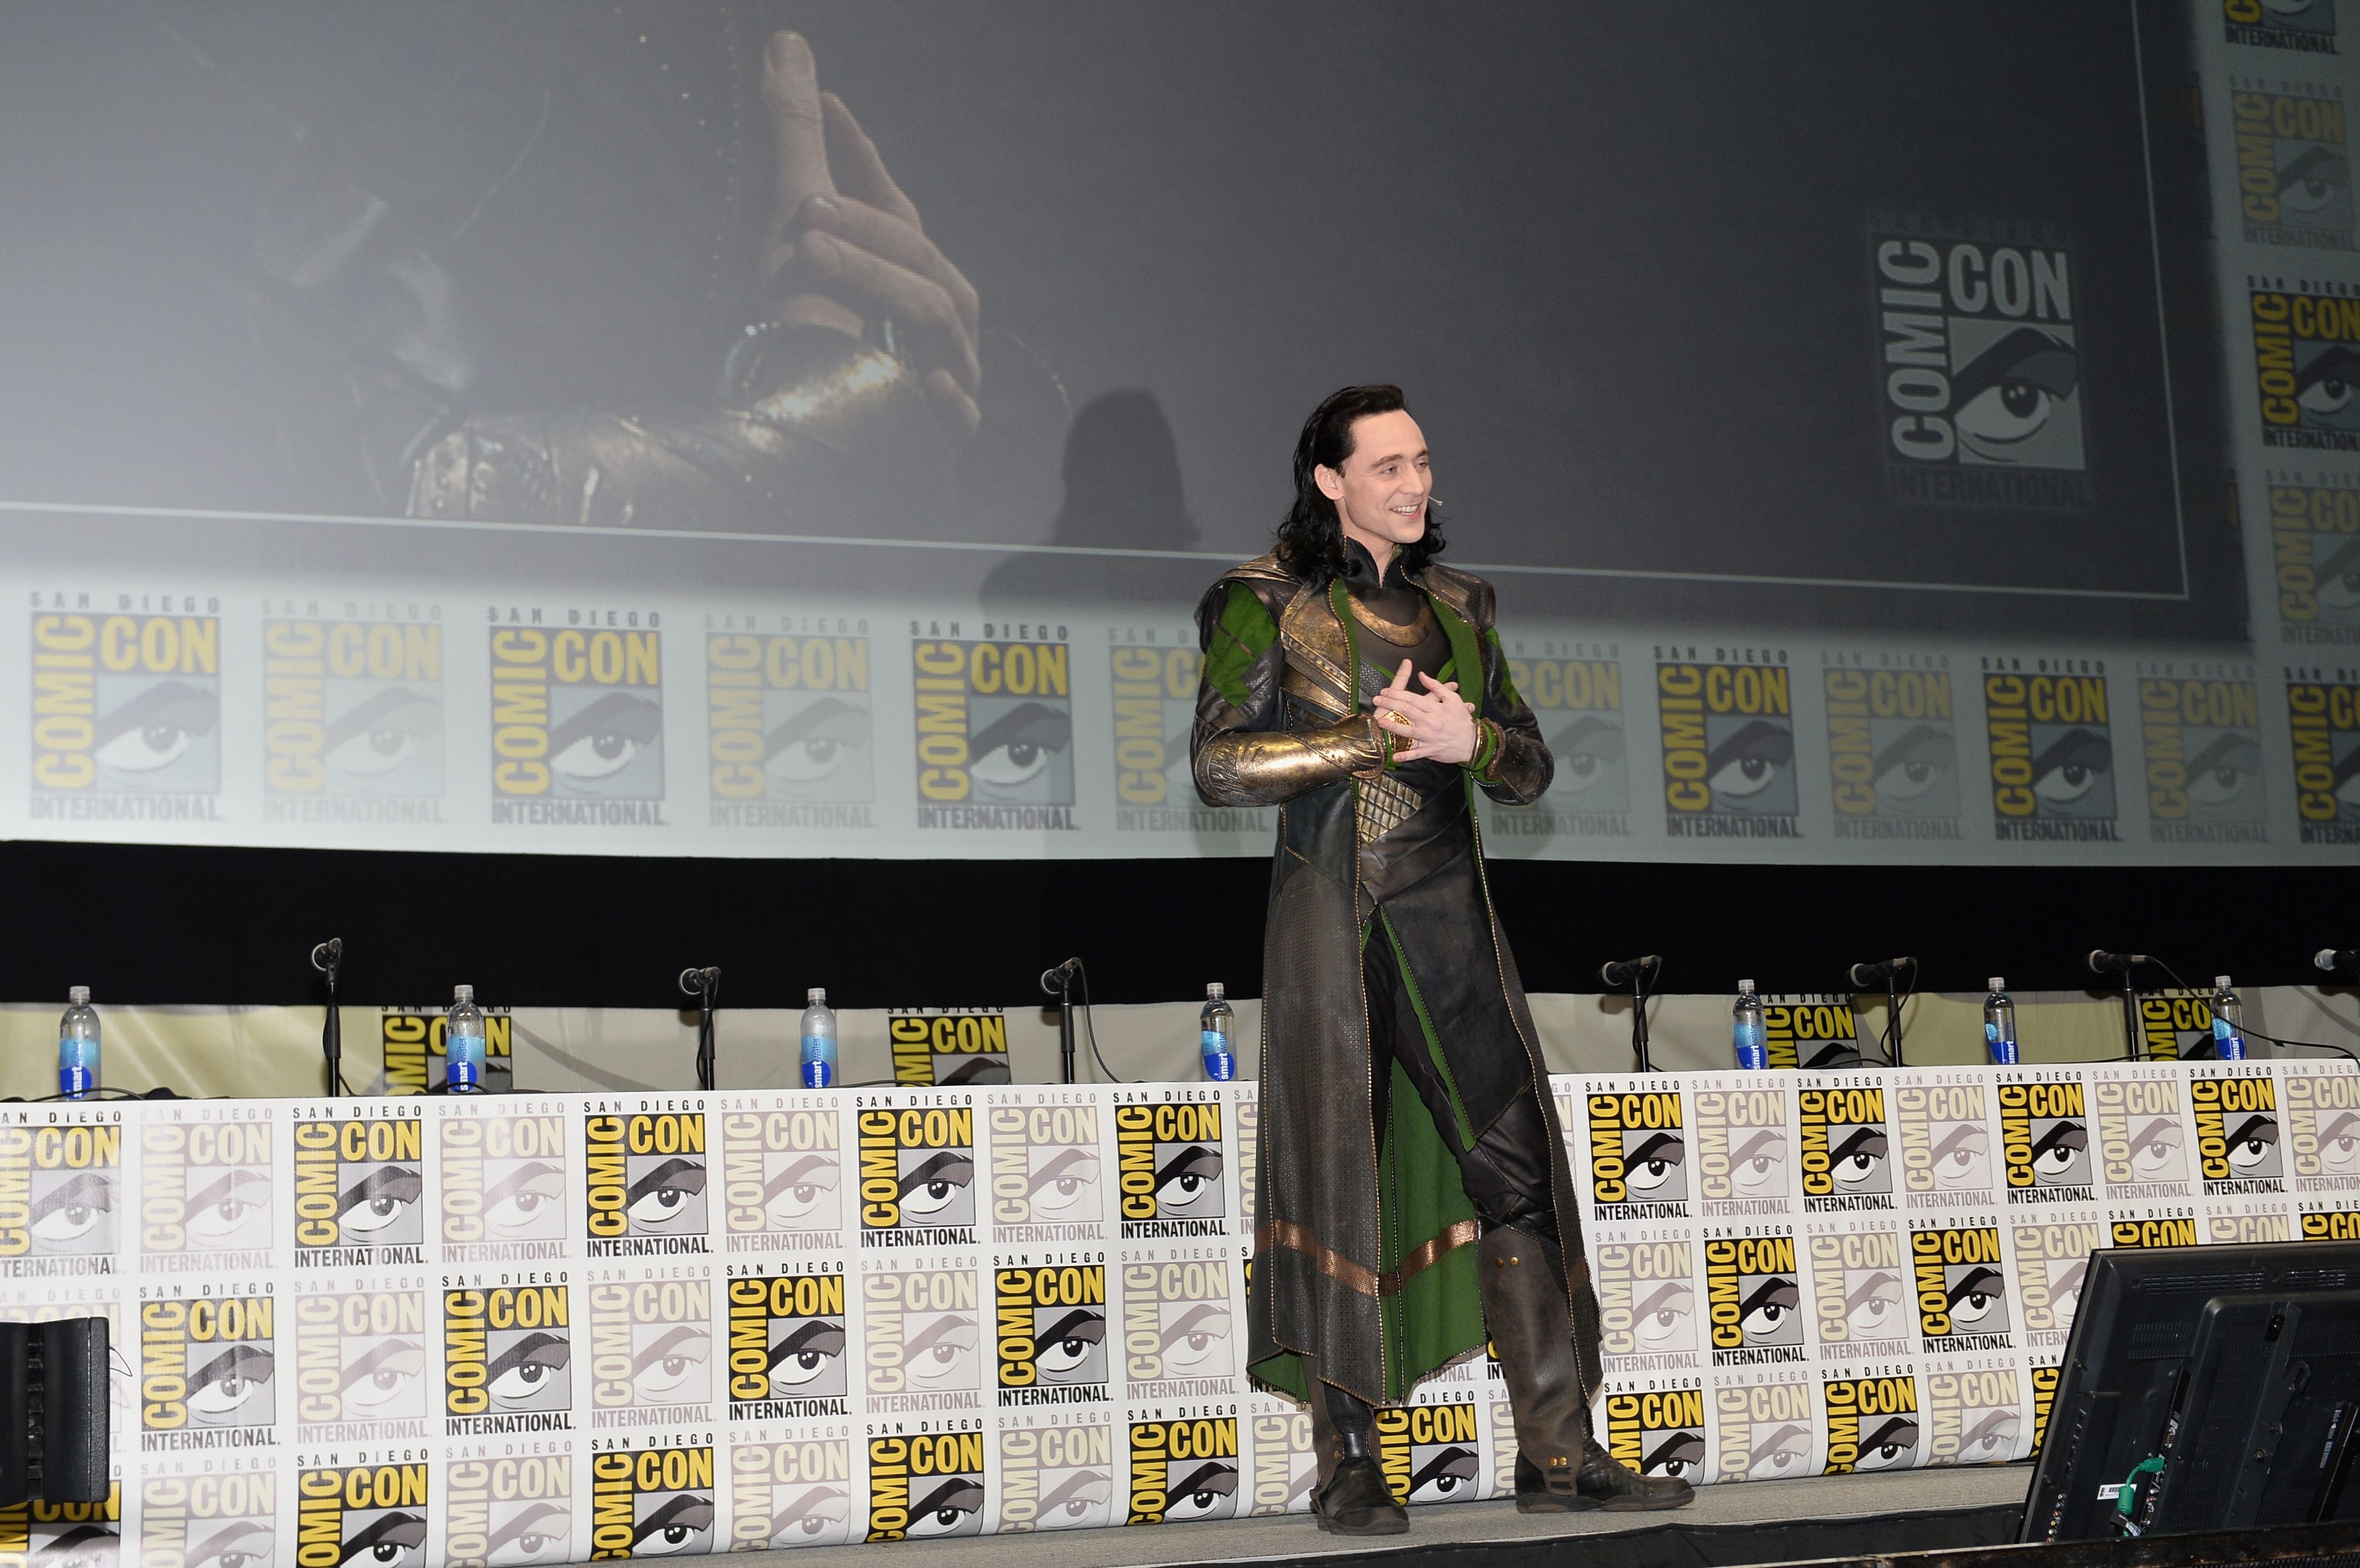 Thor: The Dark World Comic-Con 2013 Panel Photo 1